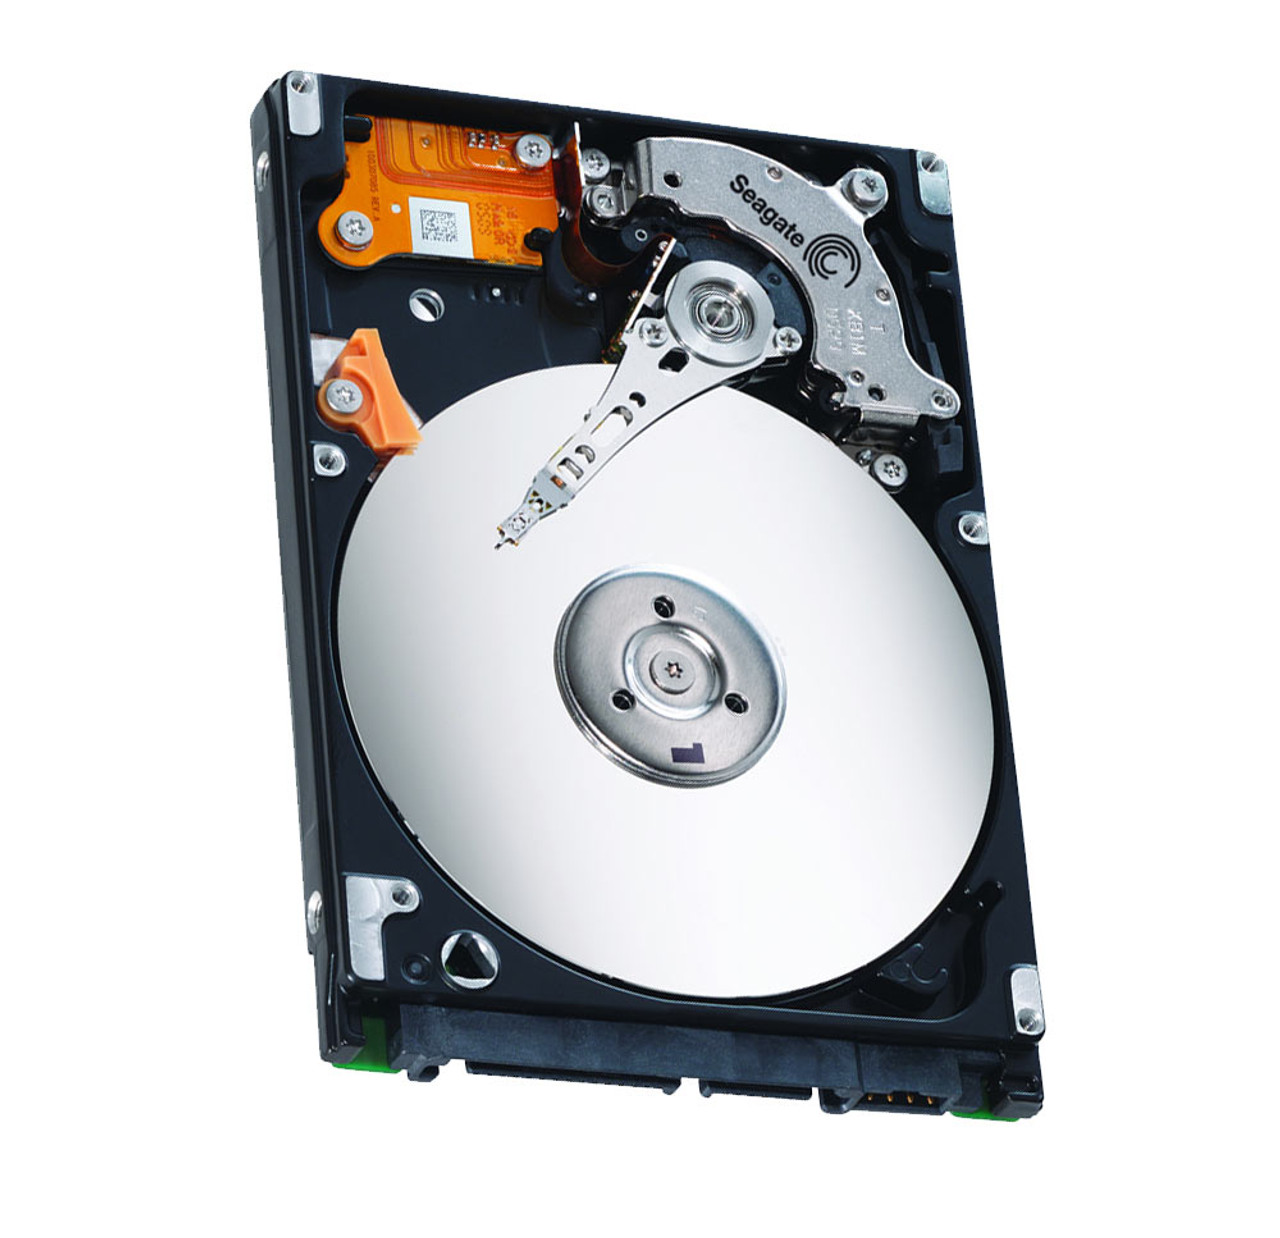 9HH132-500 - Seagate Momentus 5400.6 250GB 5400RPM SATA 3GB/s 8MB Cache 2.5-inch Internal Hard Disk Drive